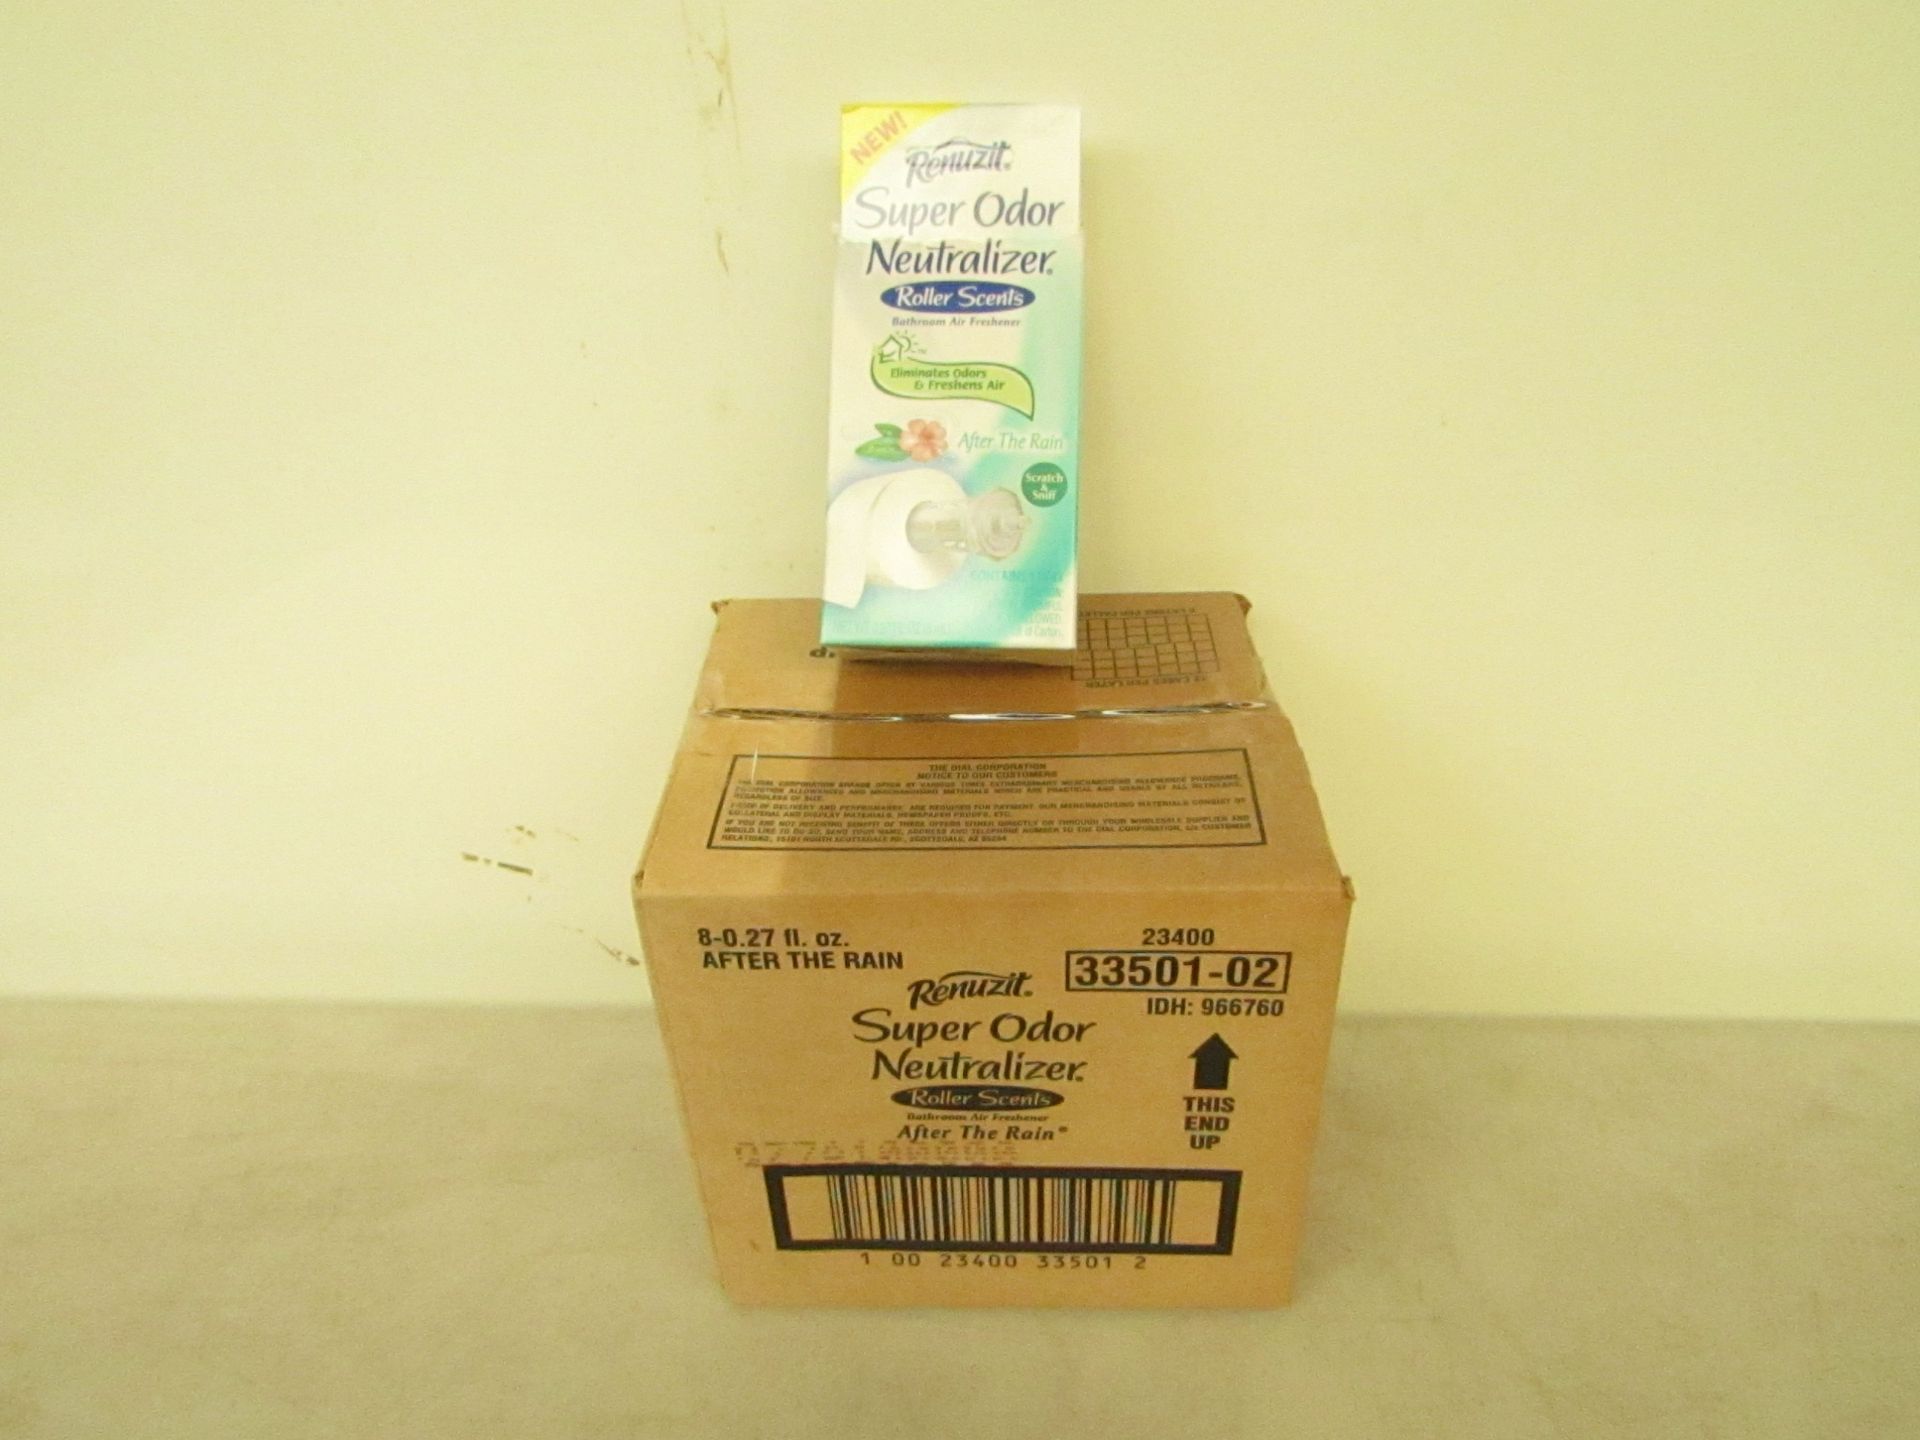 Box containing approx 8x Renutzit Super Odor Neutralizer.